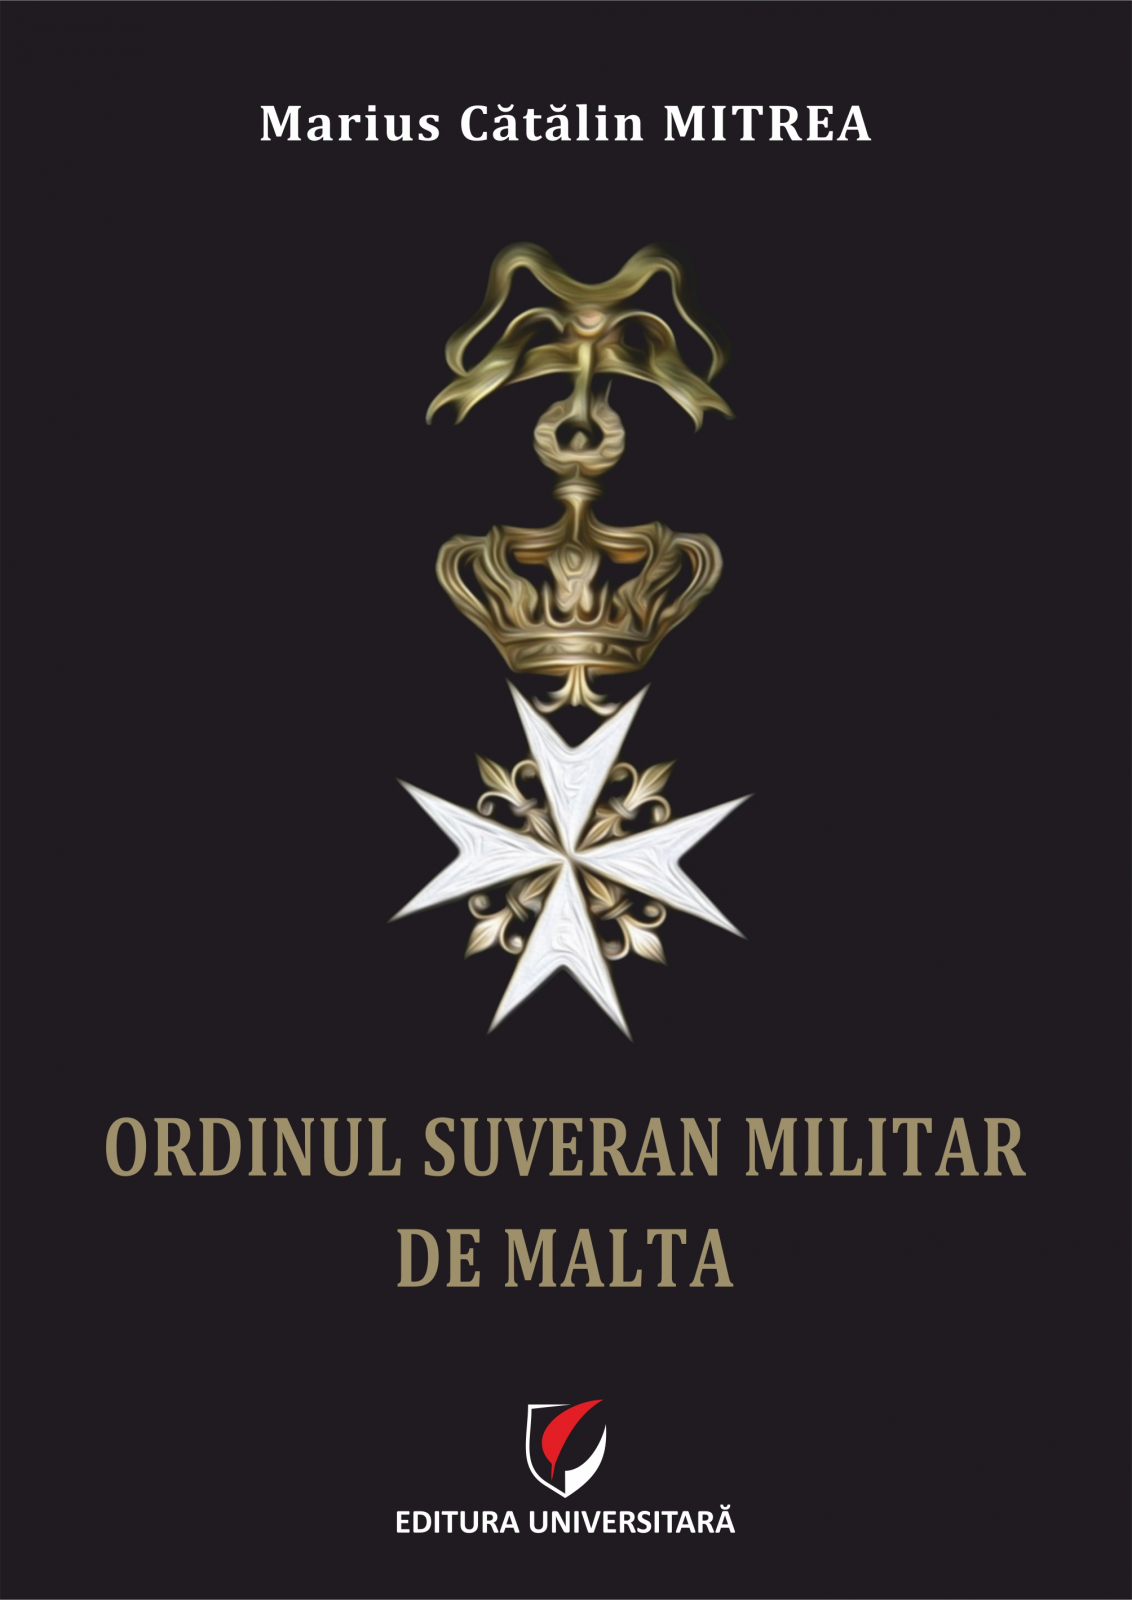 Order　Sovereign　Malta　Military　of